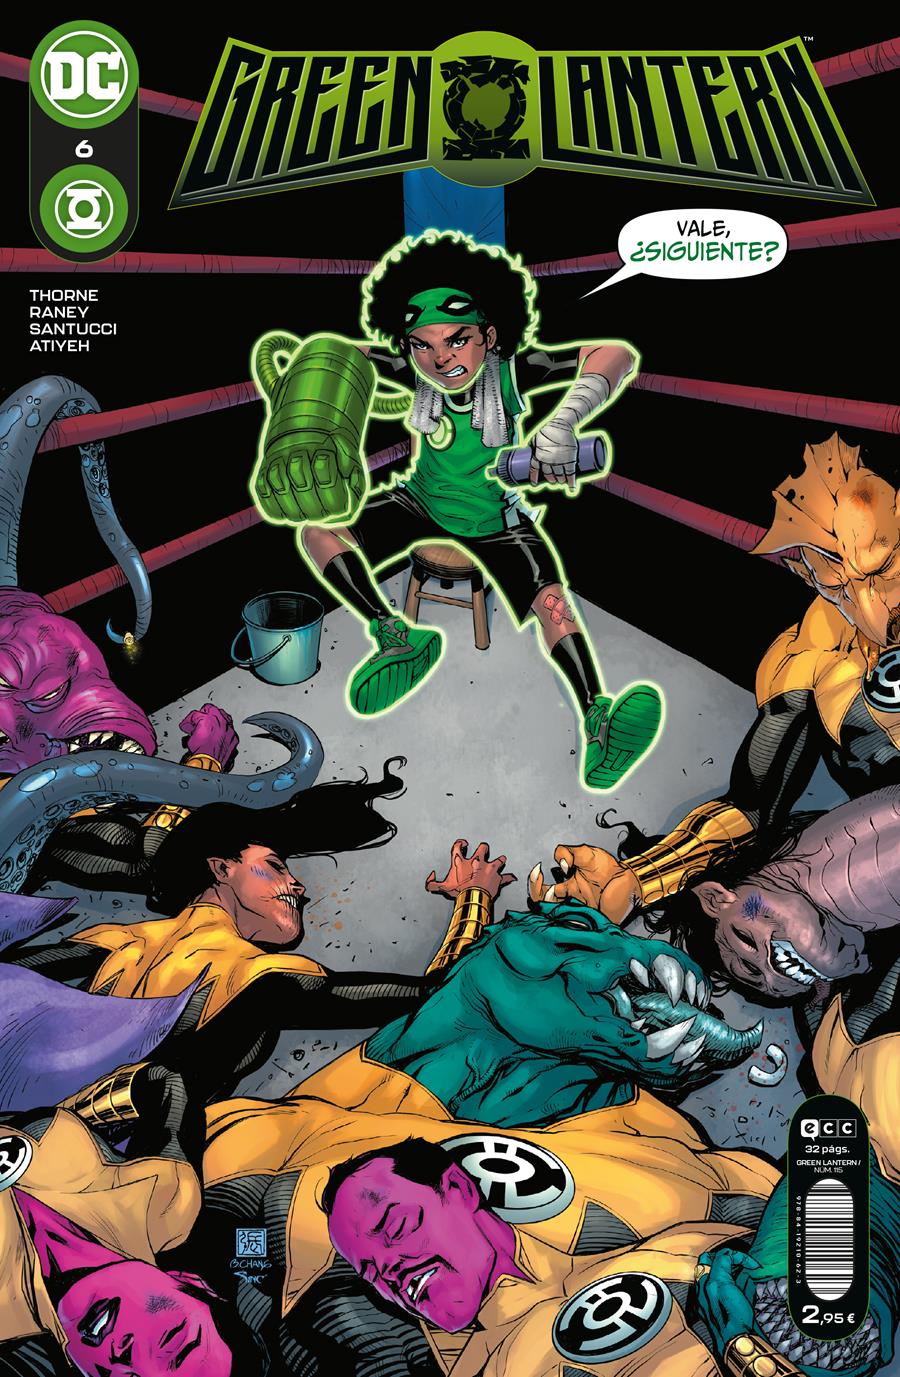 Green Lantern núm. 6/ 115 | N0422-ECC17 | Geoffrey Thorne / Marco Santucci / Tom Raney | Terra de Còmic - Tu tienda de cómics online especializada en cómics, manga y merchandising